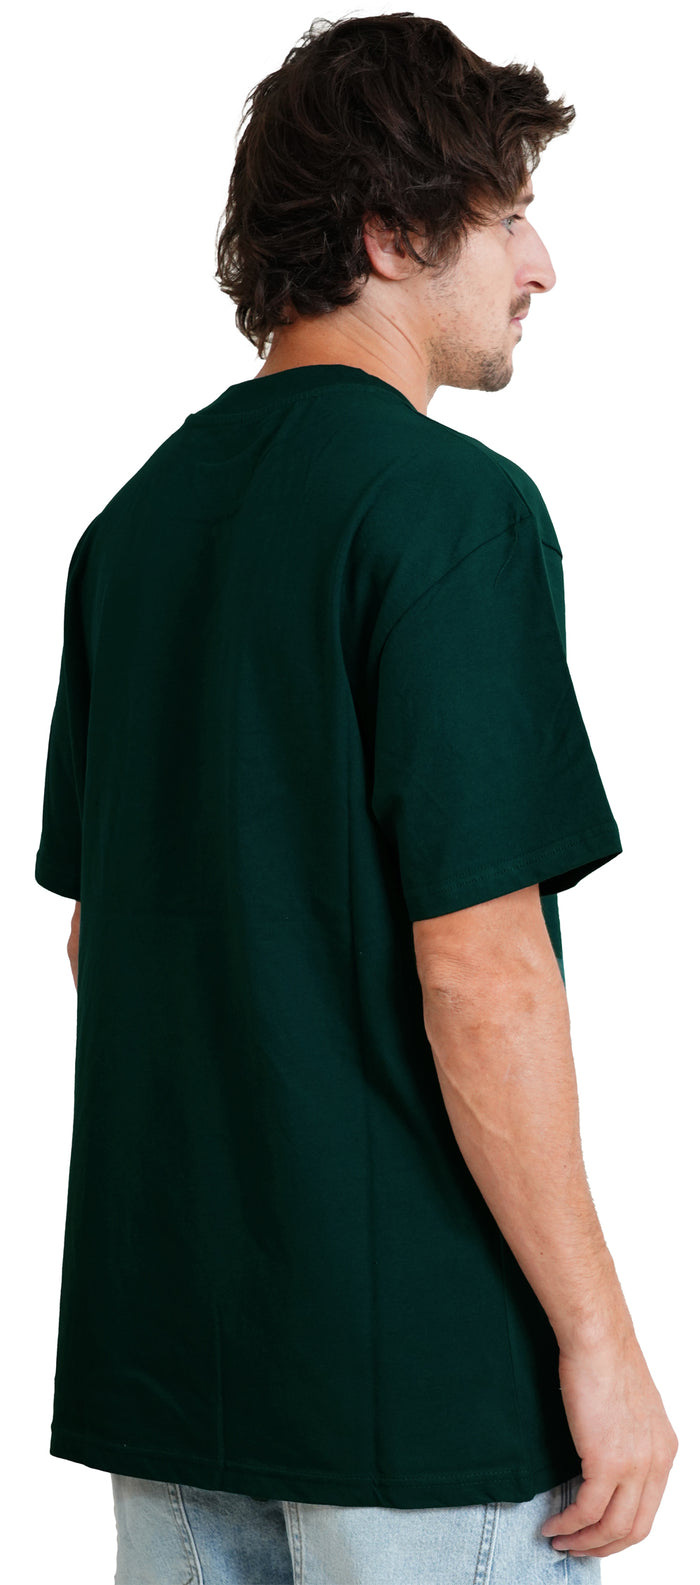 Rephorn Tee - Phieres - Ponderosa Pine - T-Shirt